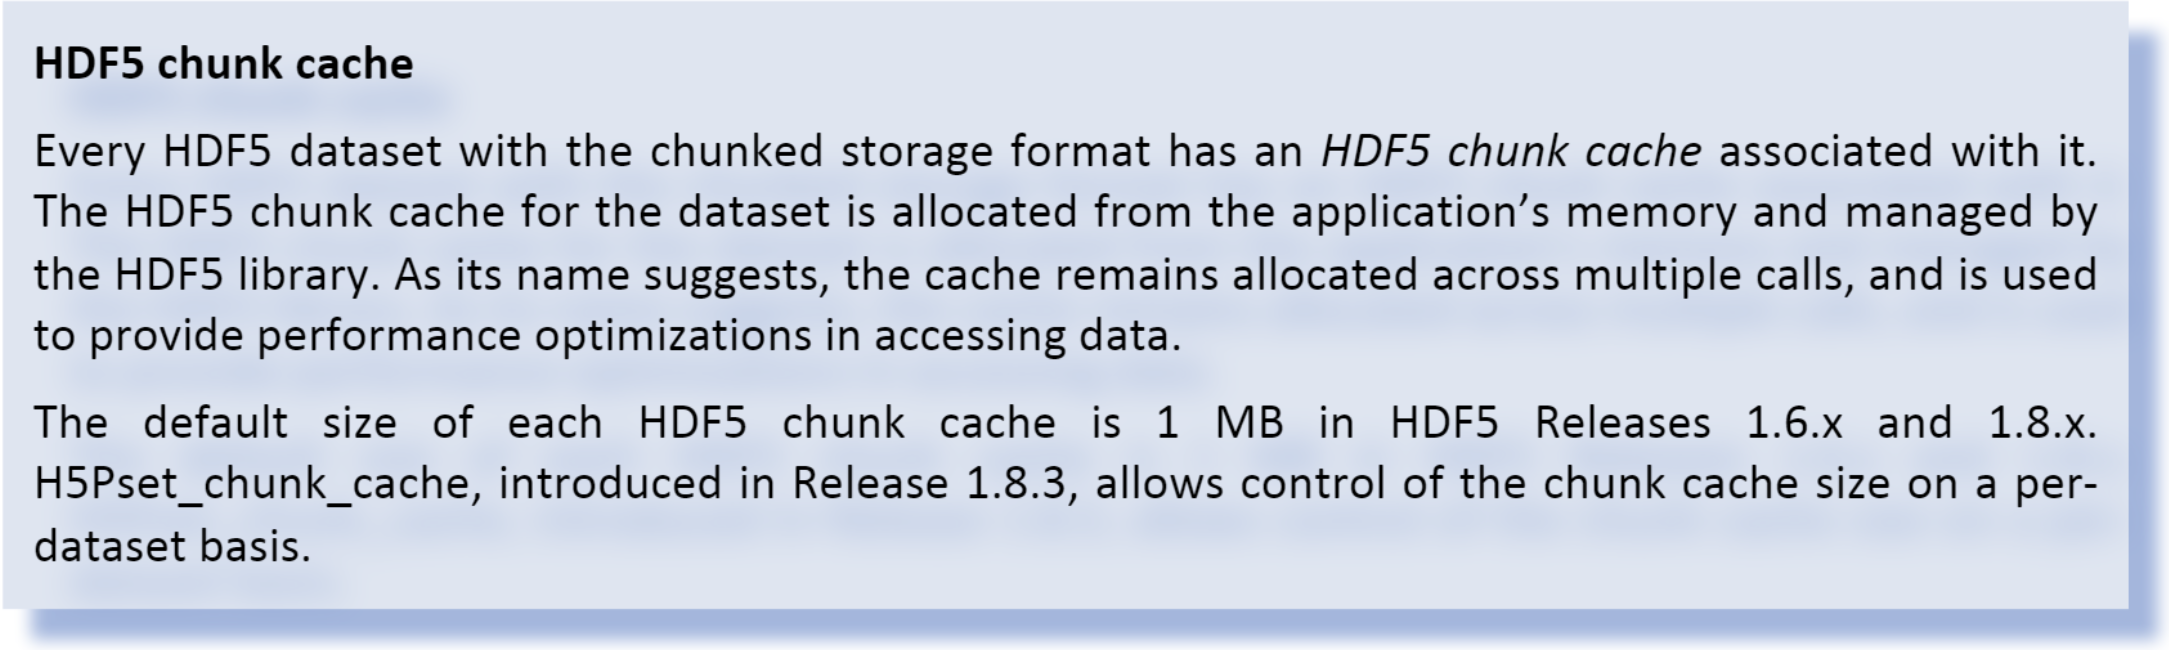 HDF5 chunk cache